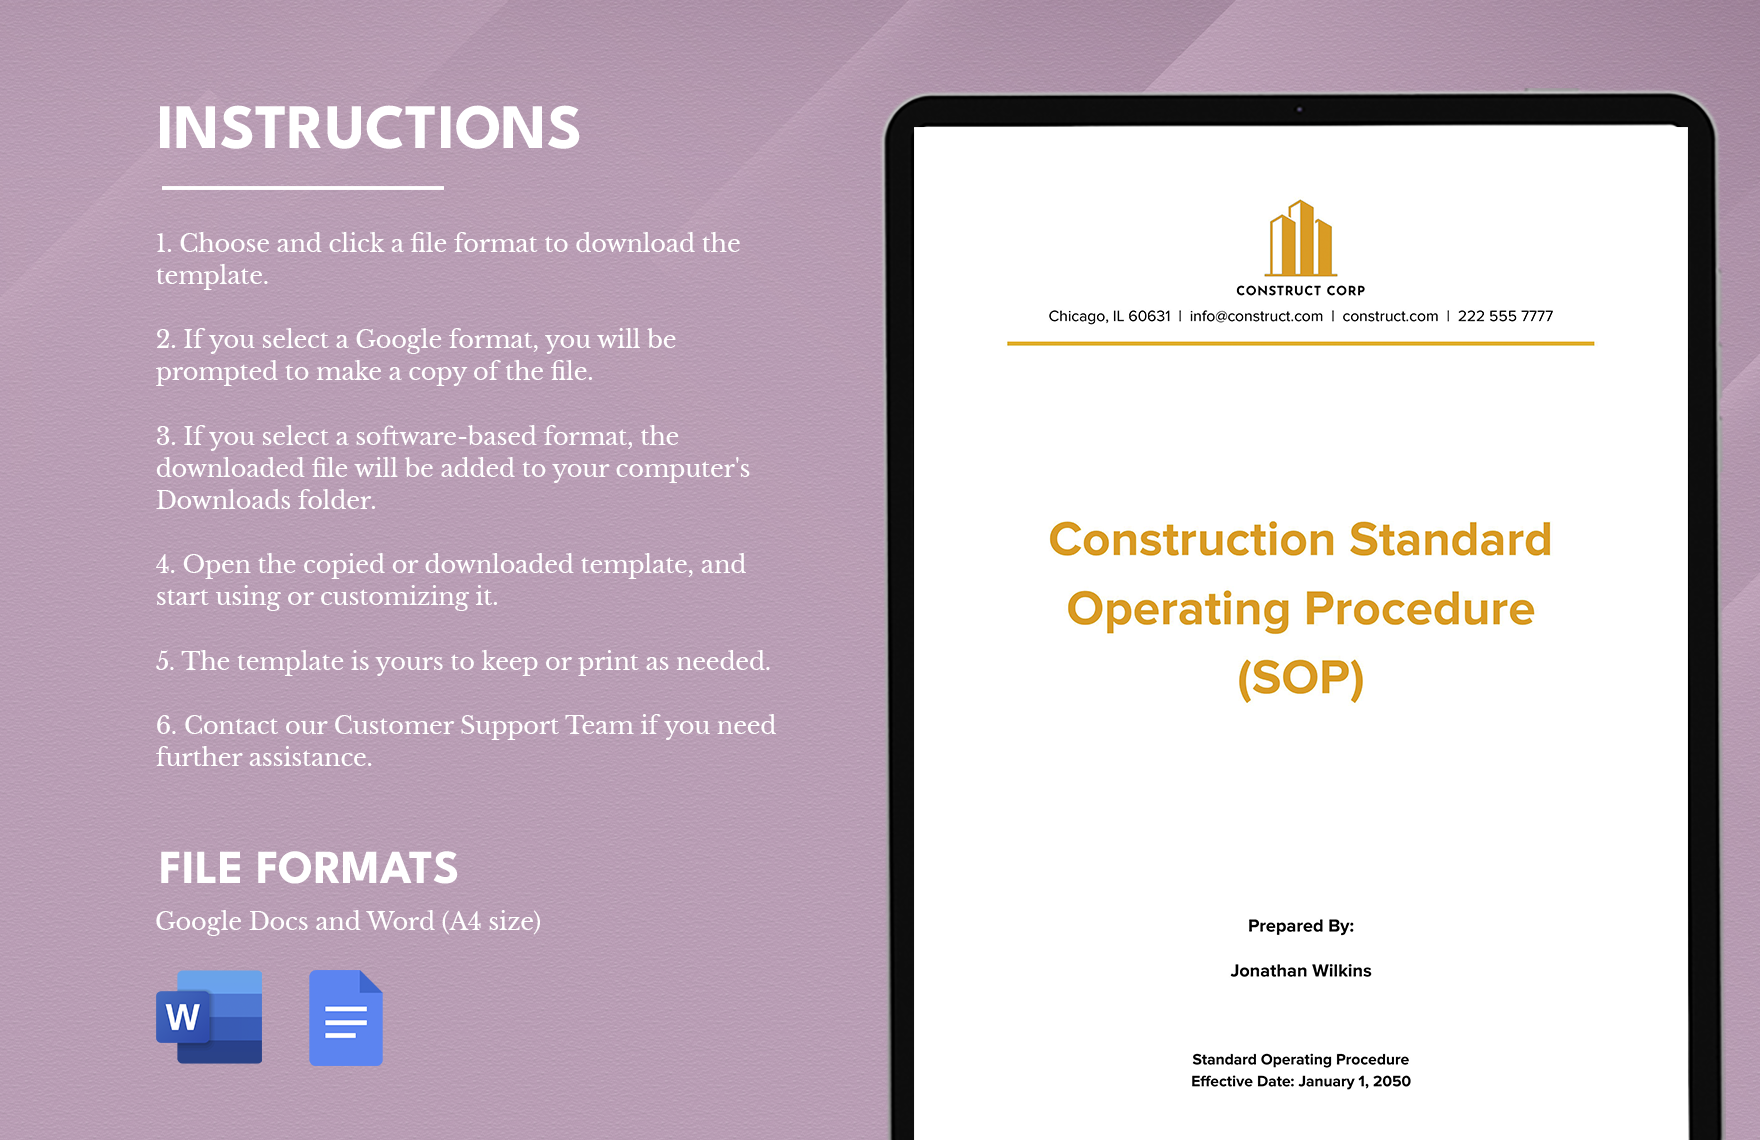 Construction Standard Operating Procedure (SOP)